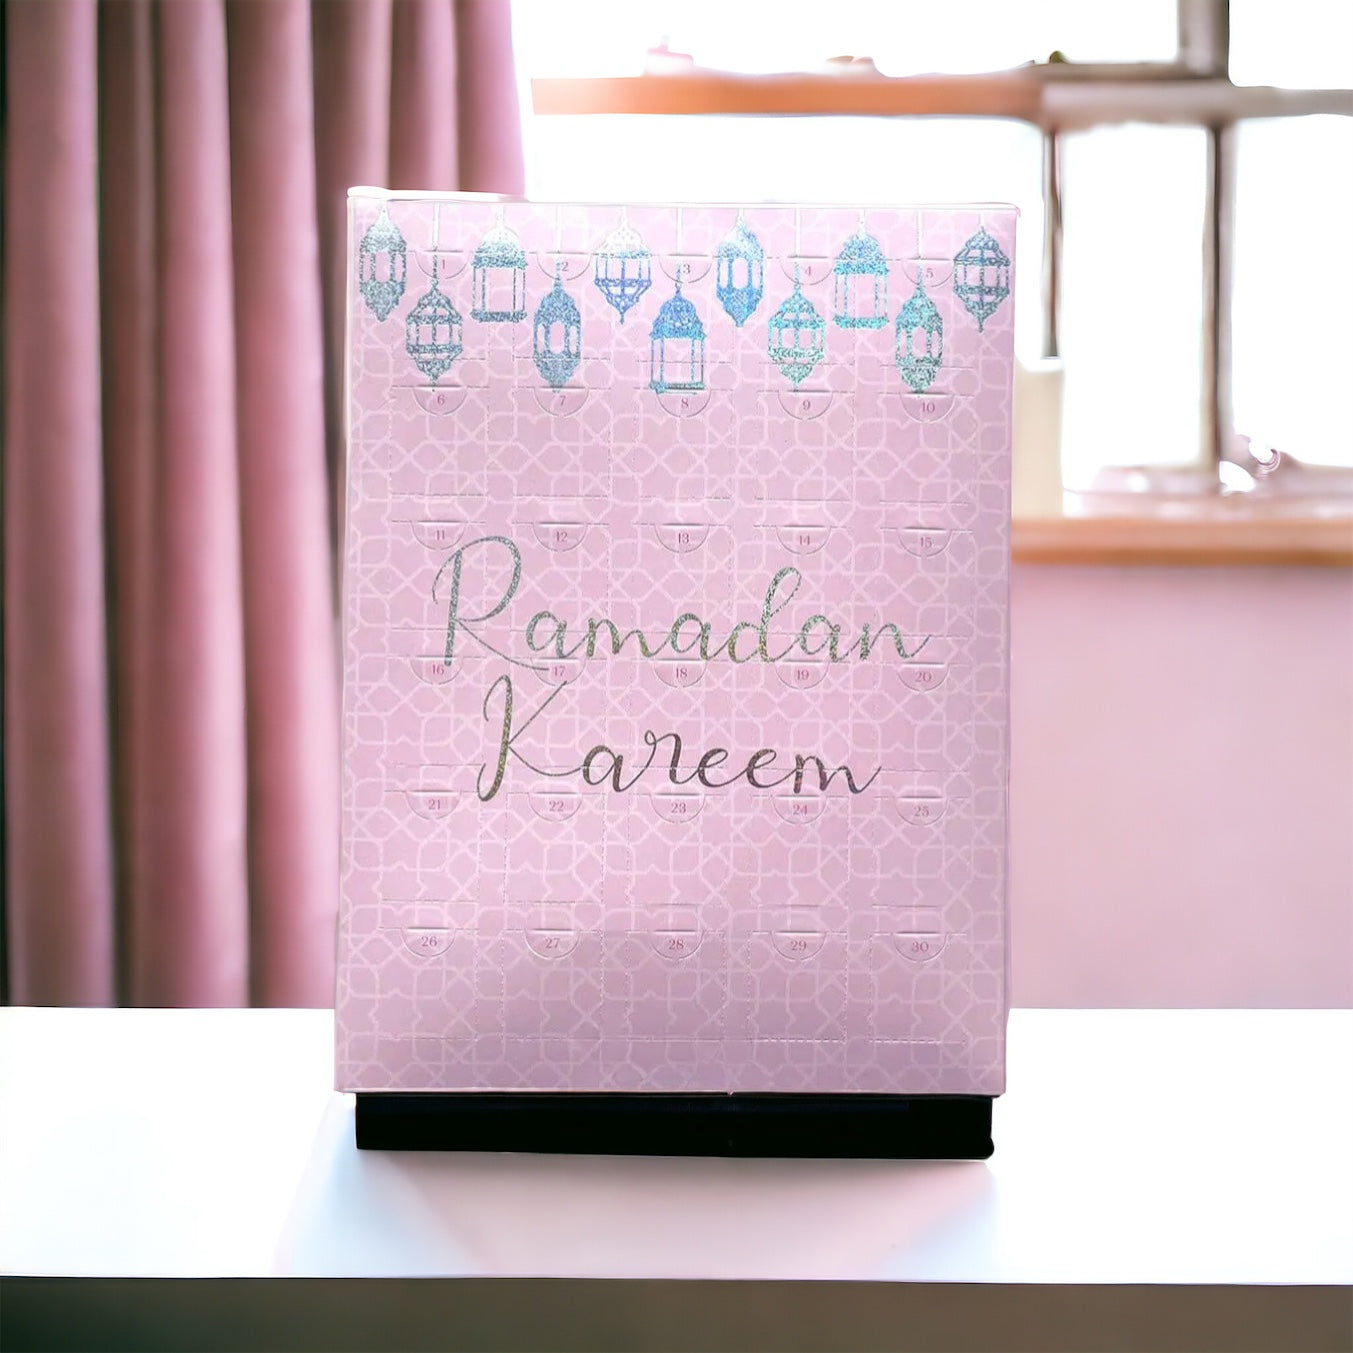 Ramadan Kareem Chocolate Calendar